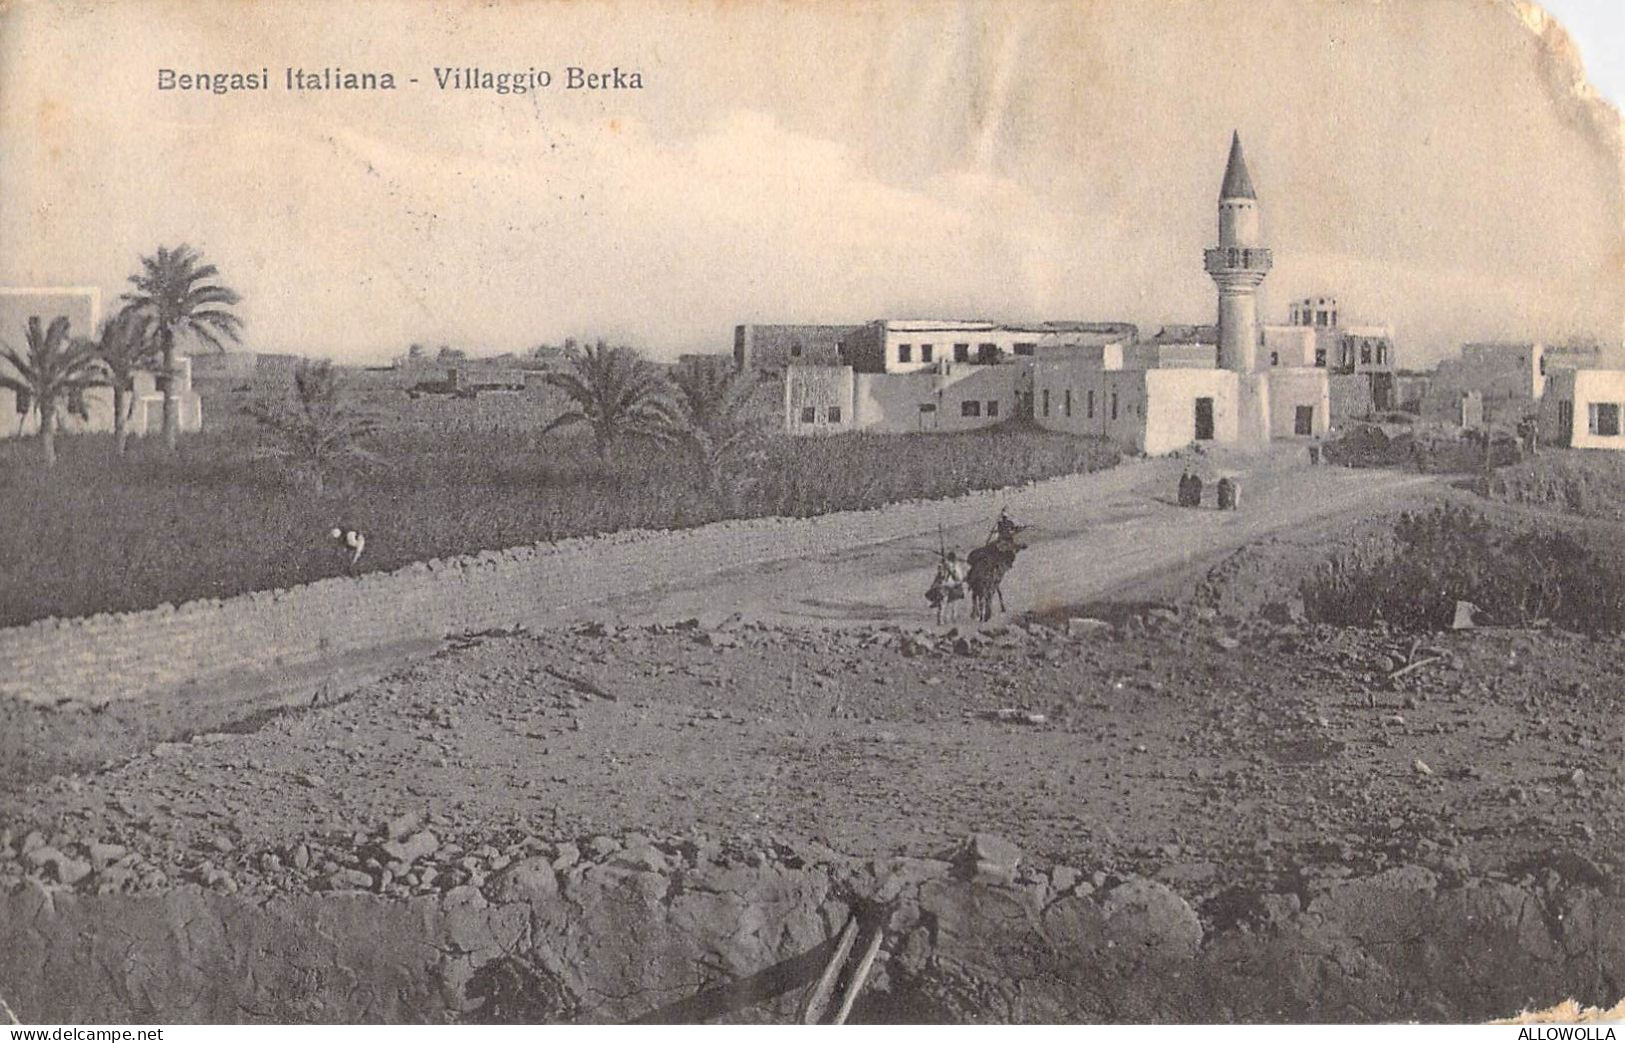 26932 " BENGASI ITALIANA-VILLAGGIO BERKA " ANIMATA-VERA FOTOCART.POST.  SPED.1912 FRANCHIGIA MILITARE - Libya